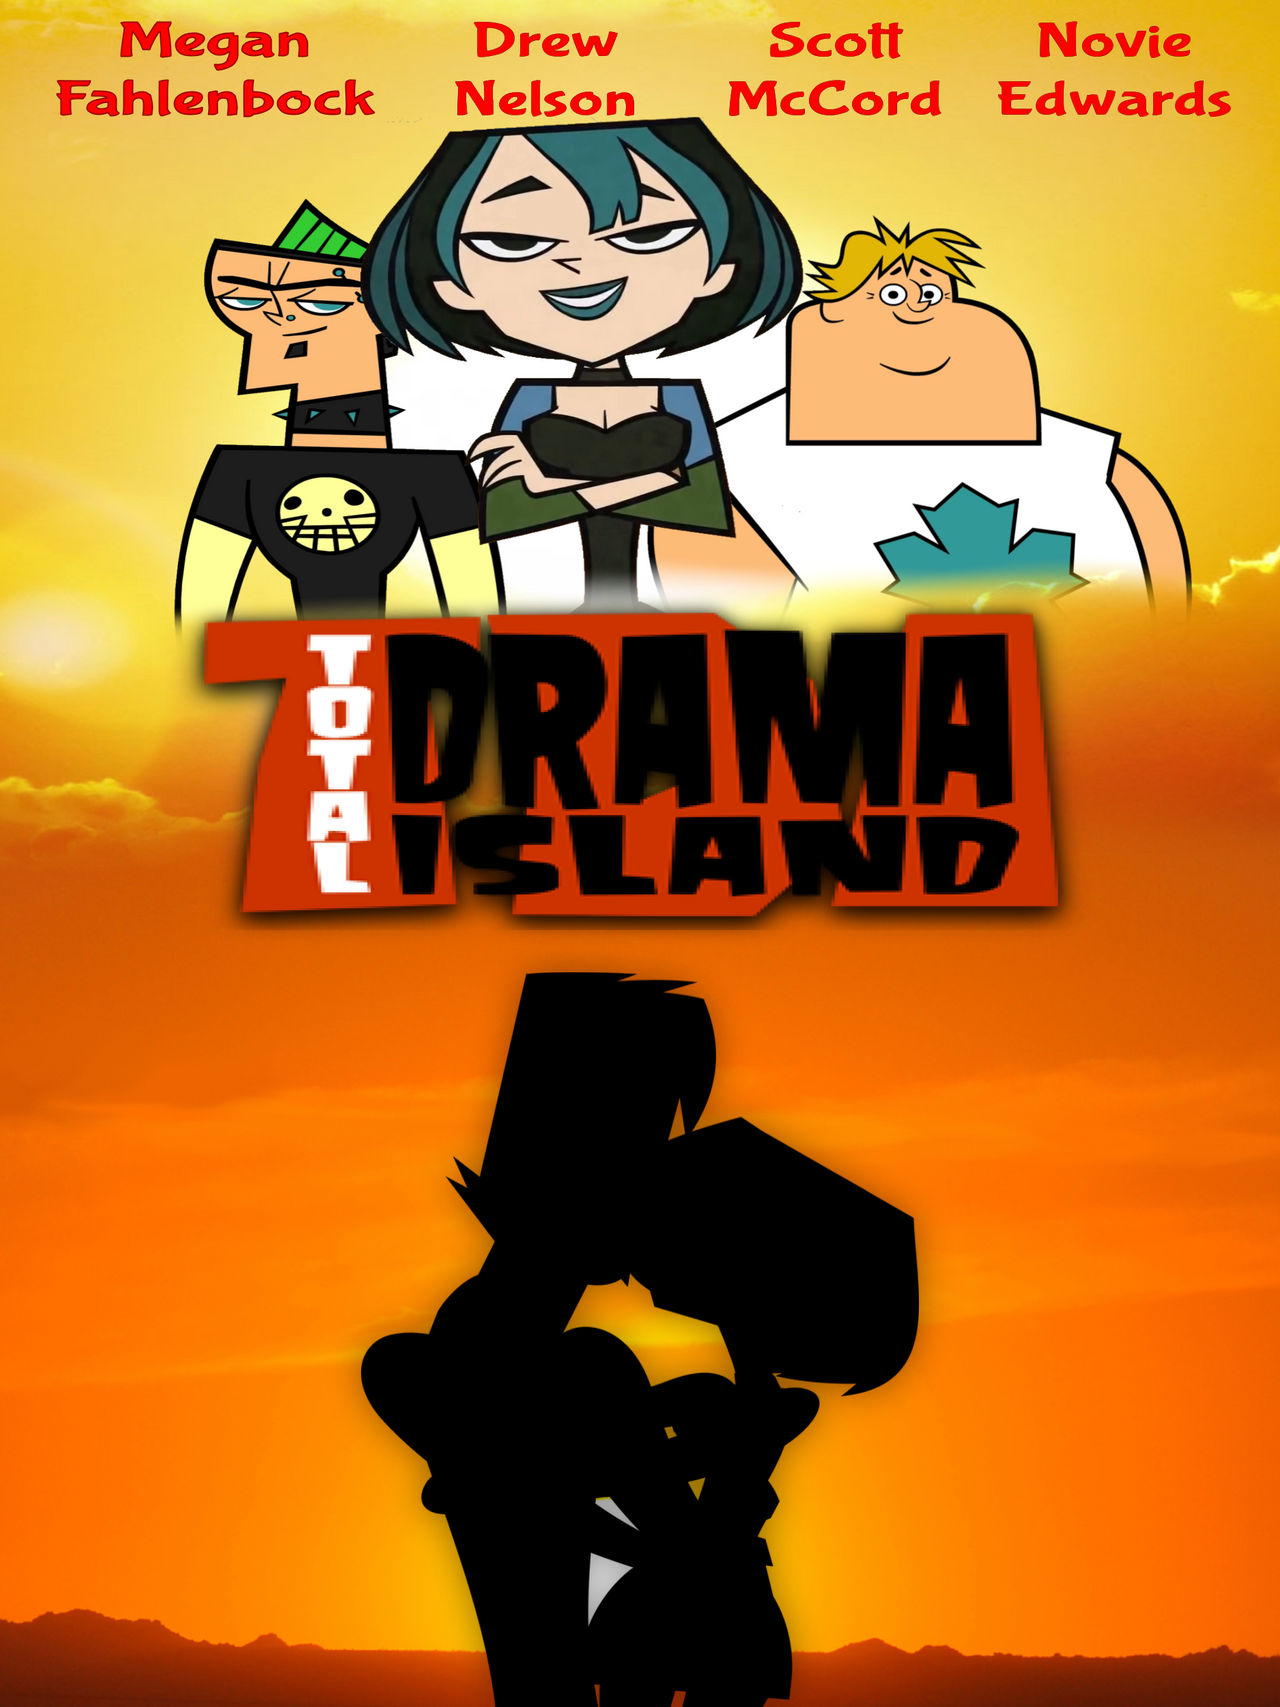 Total Drama Island Again Cast Photo by Crazed-Blue on DeviantArt